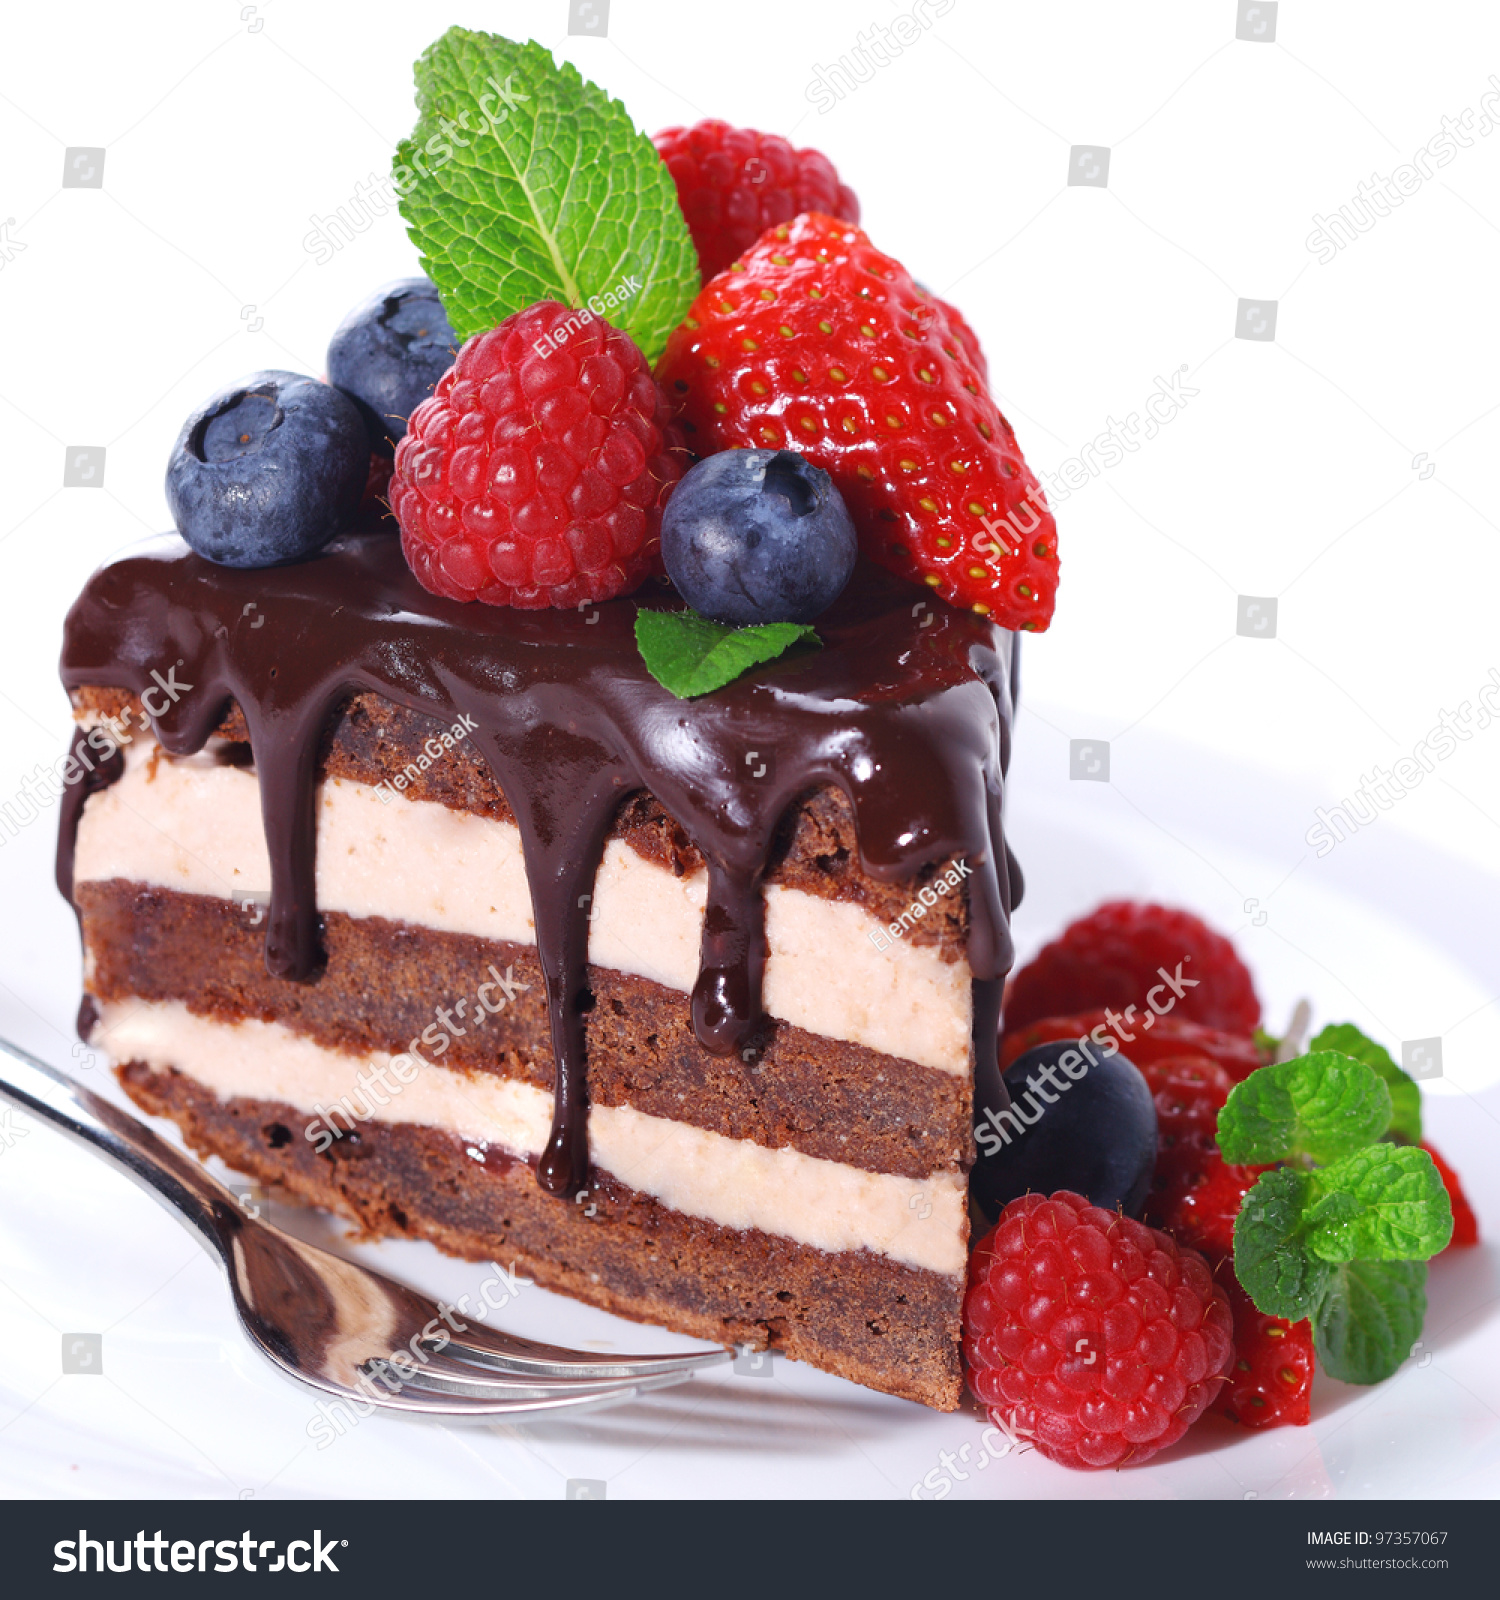 stock-photo-piece-of-chocolate-cake-with